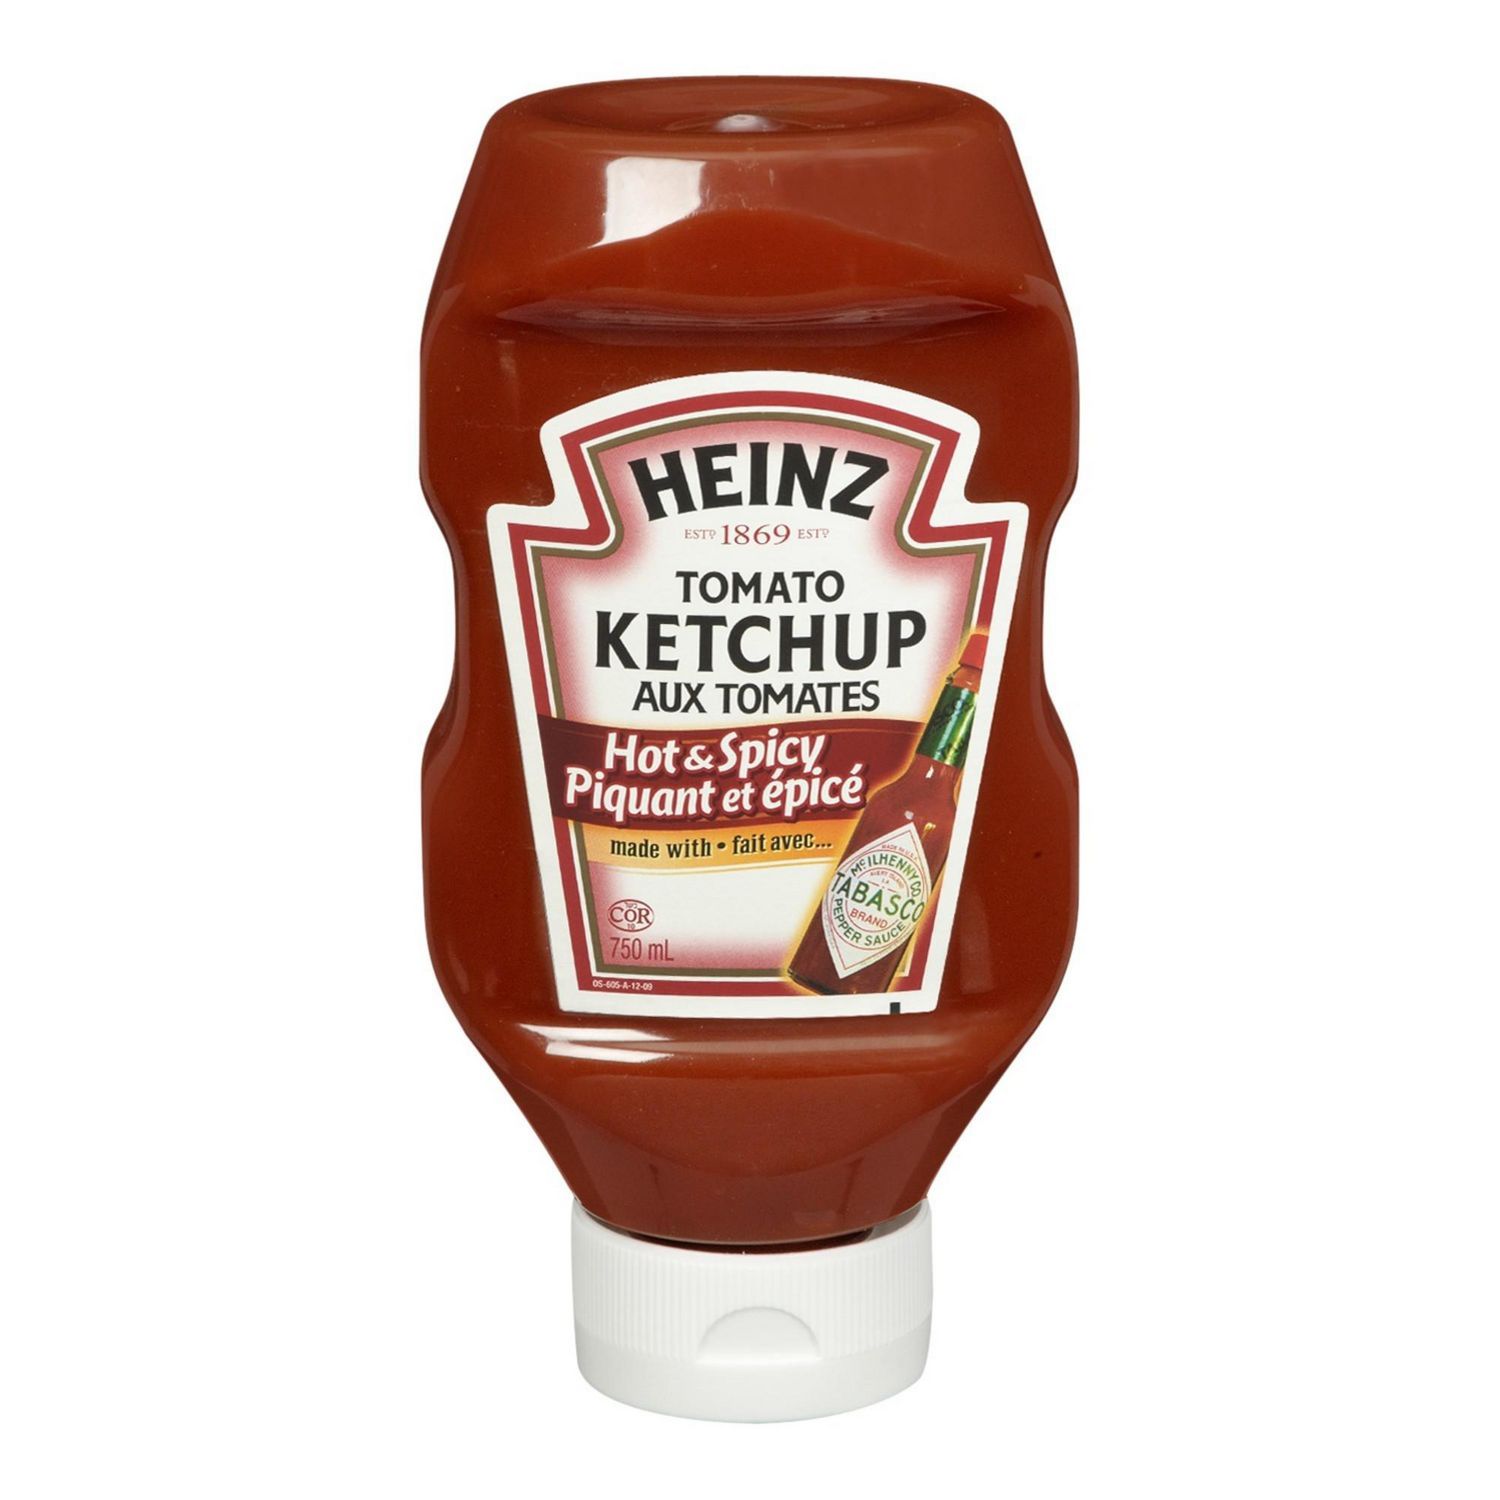 Heinz Hot Ketchup